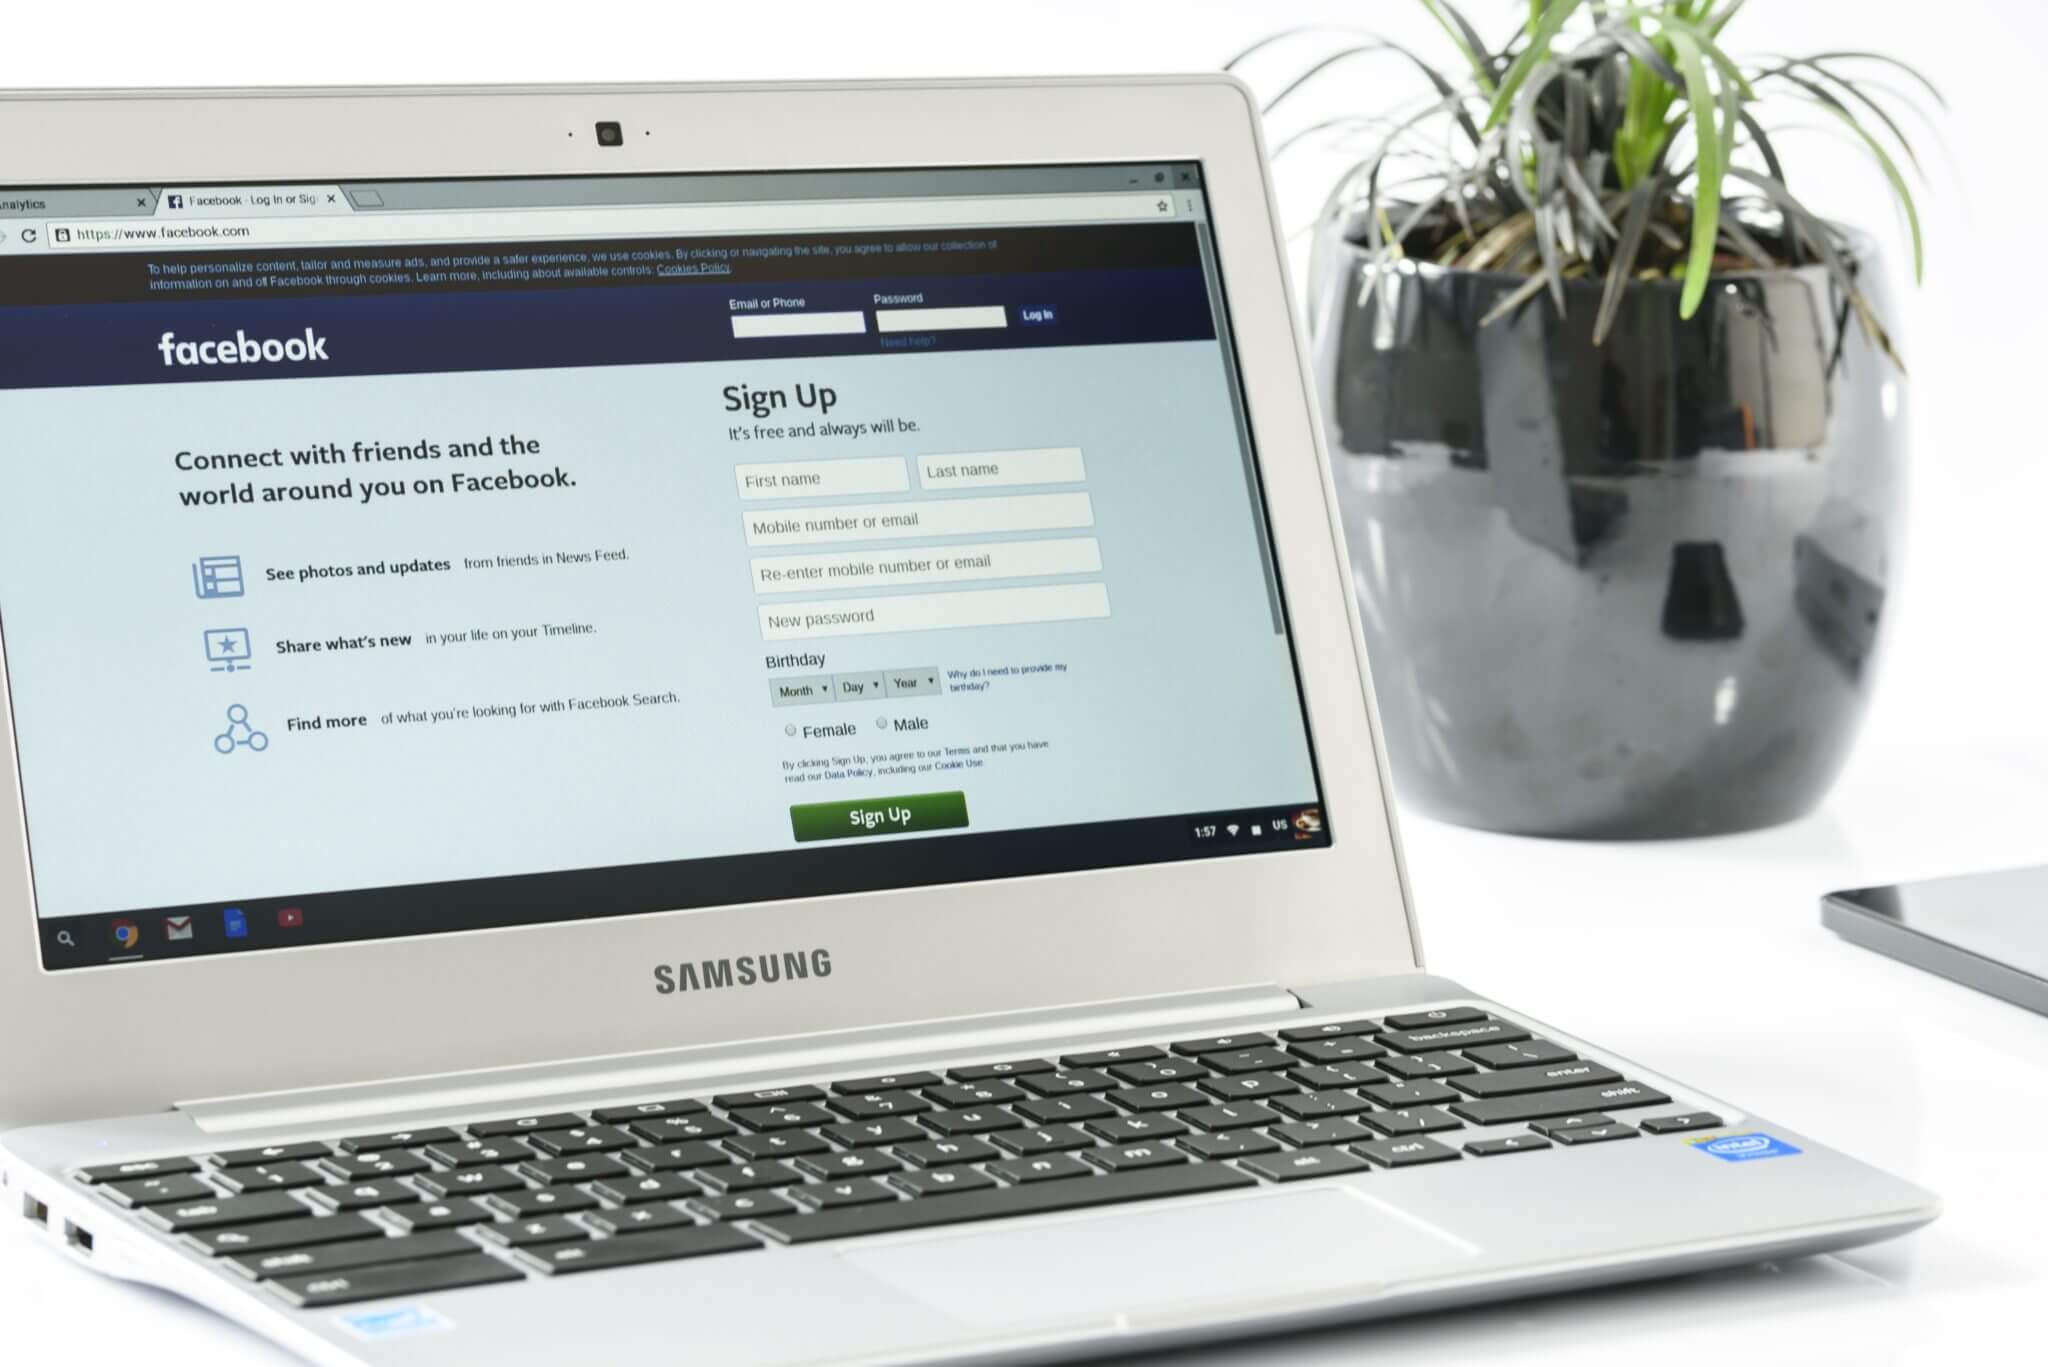 White samsung laptop computer with Facebook login screen loaded near black ceramic plant vase.